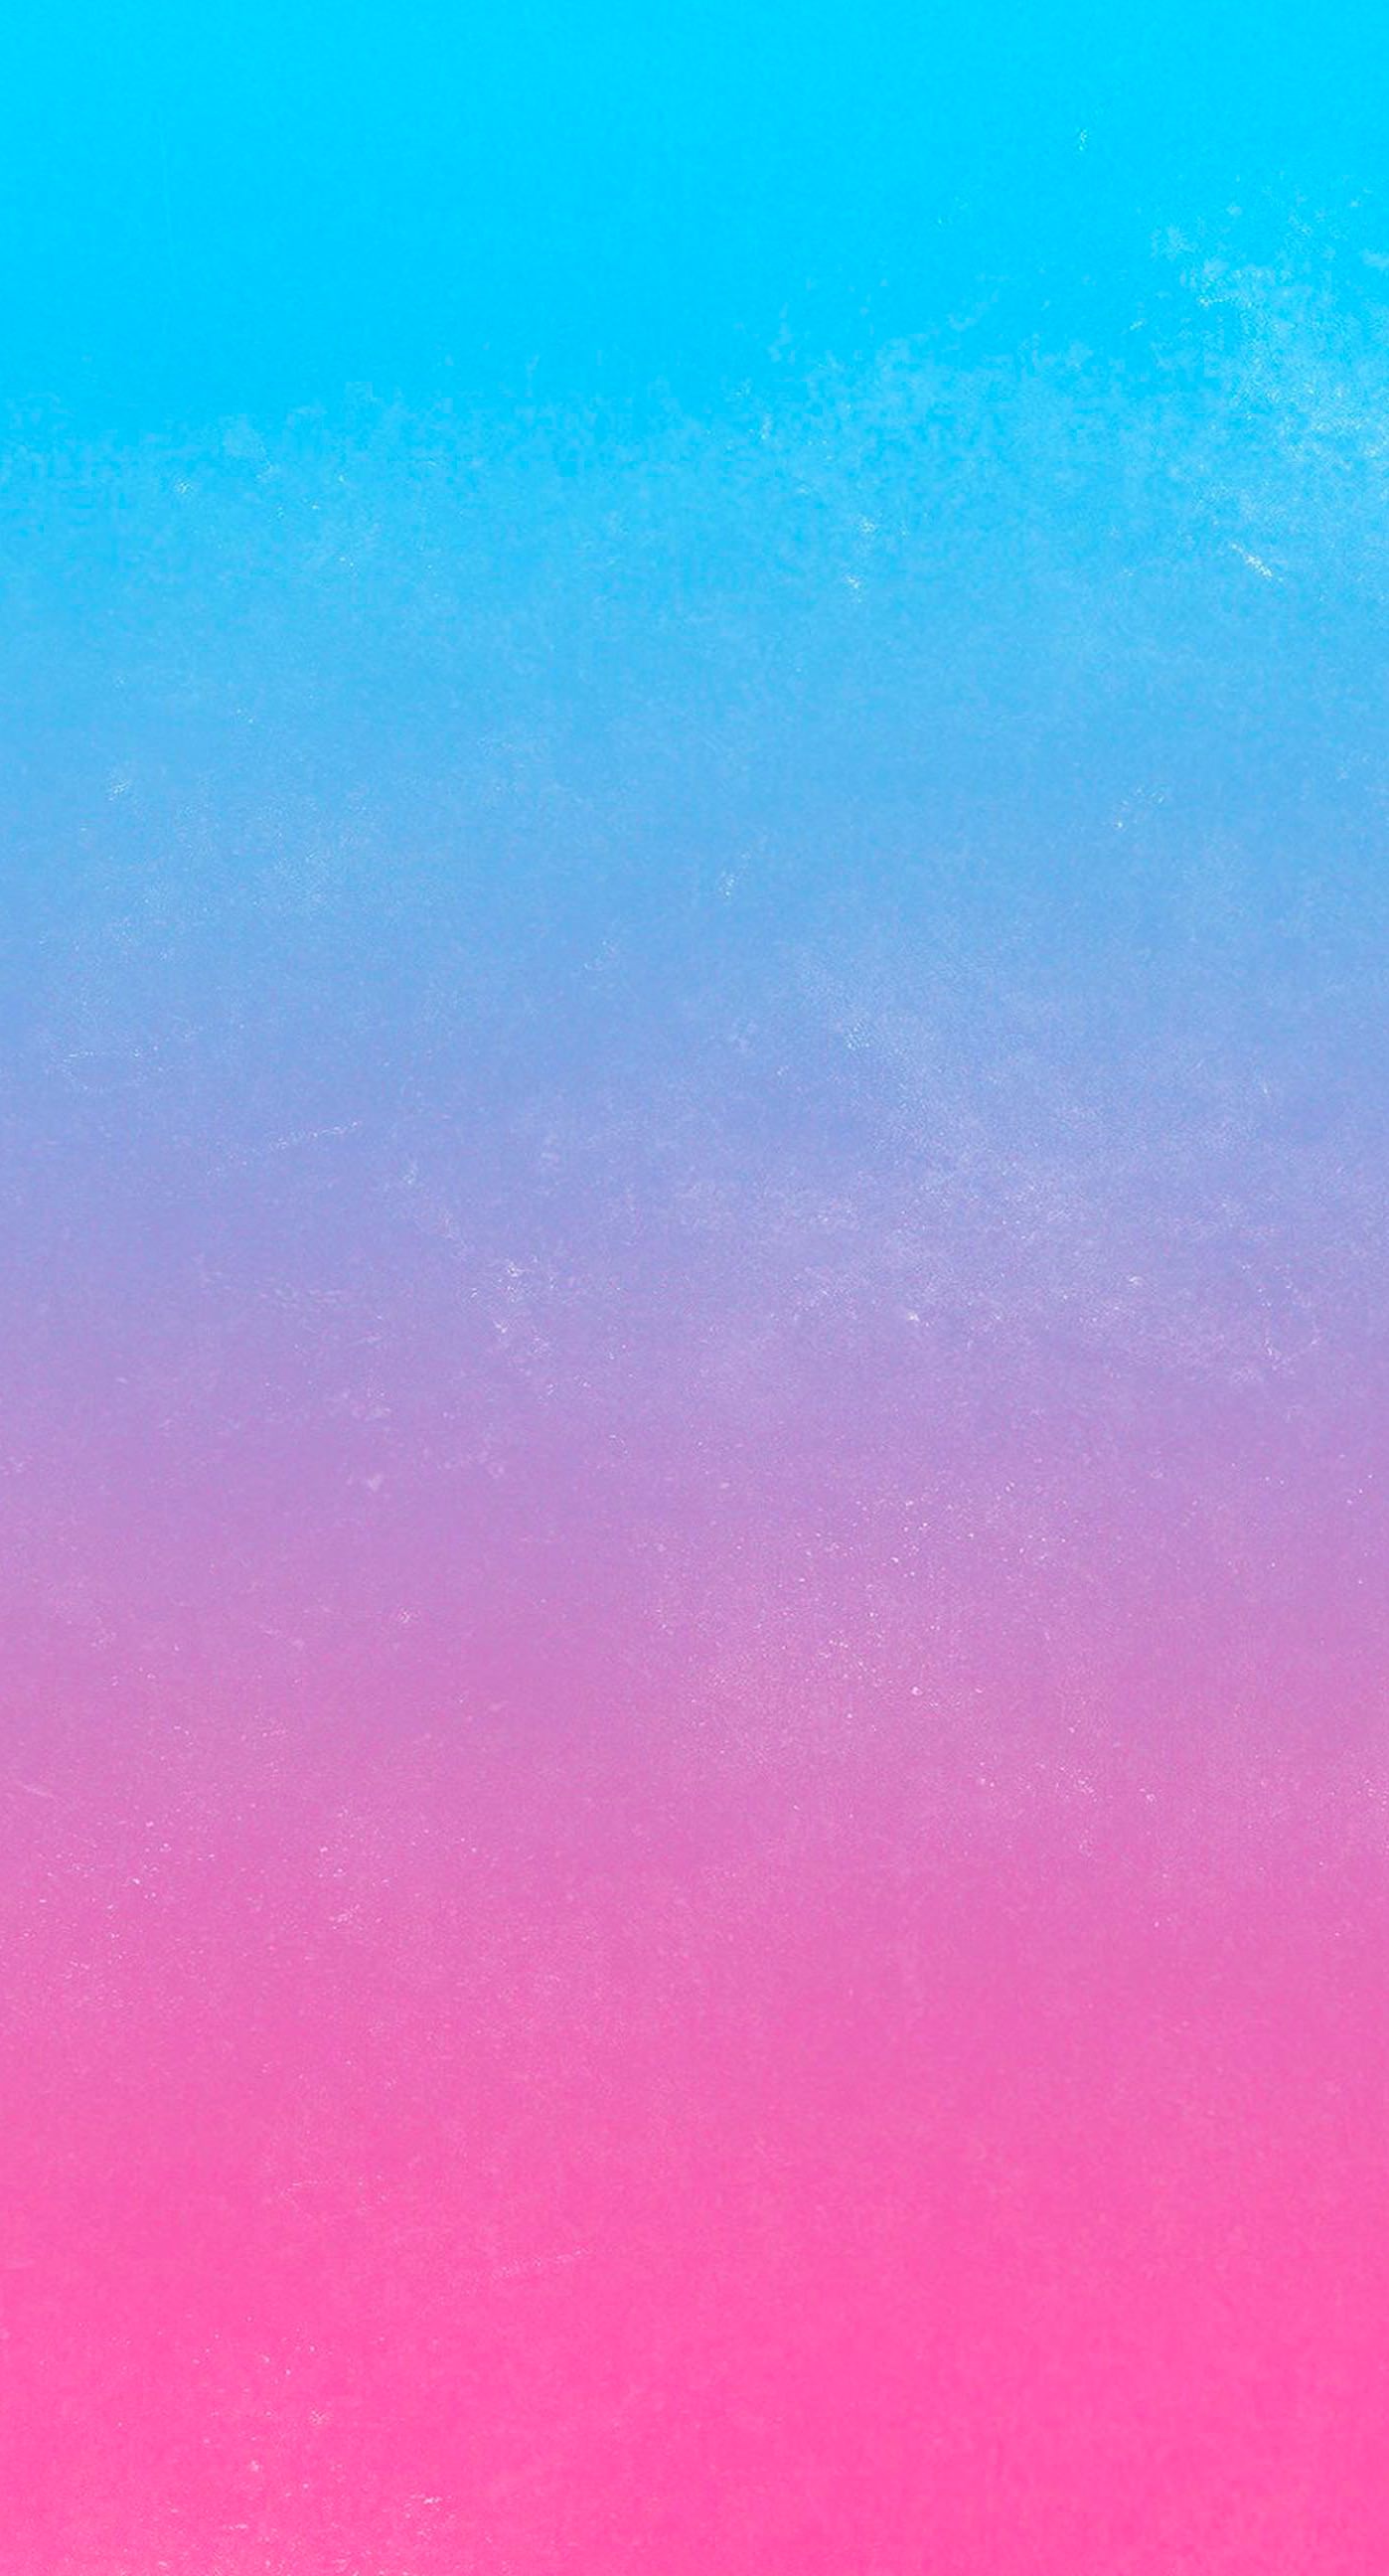 farbverlauf iphone wallpaper,blau,rosa,himmel,rot,türkis